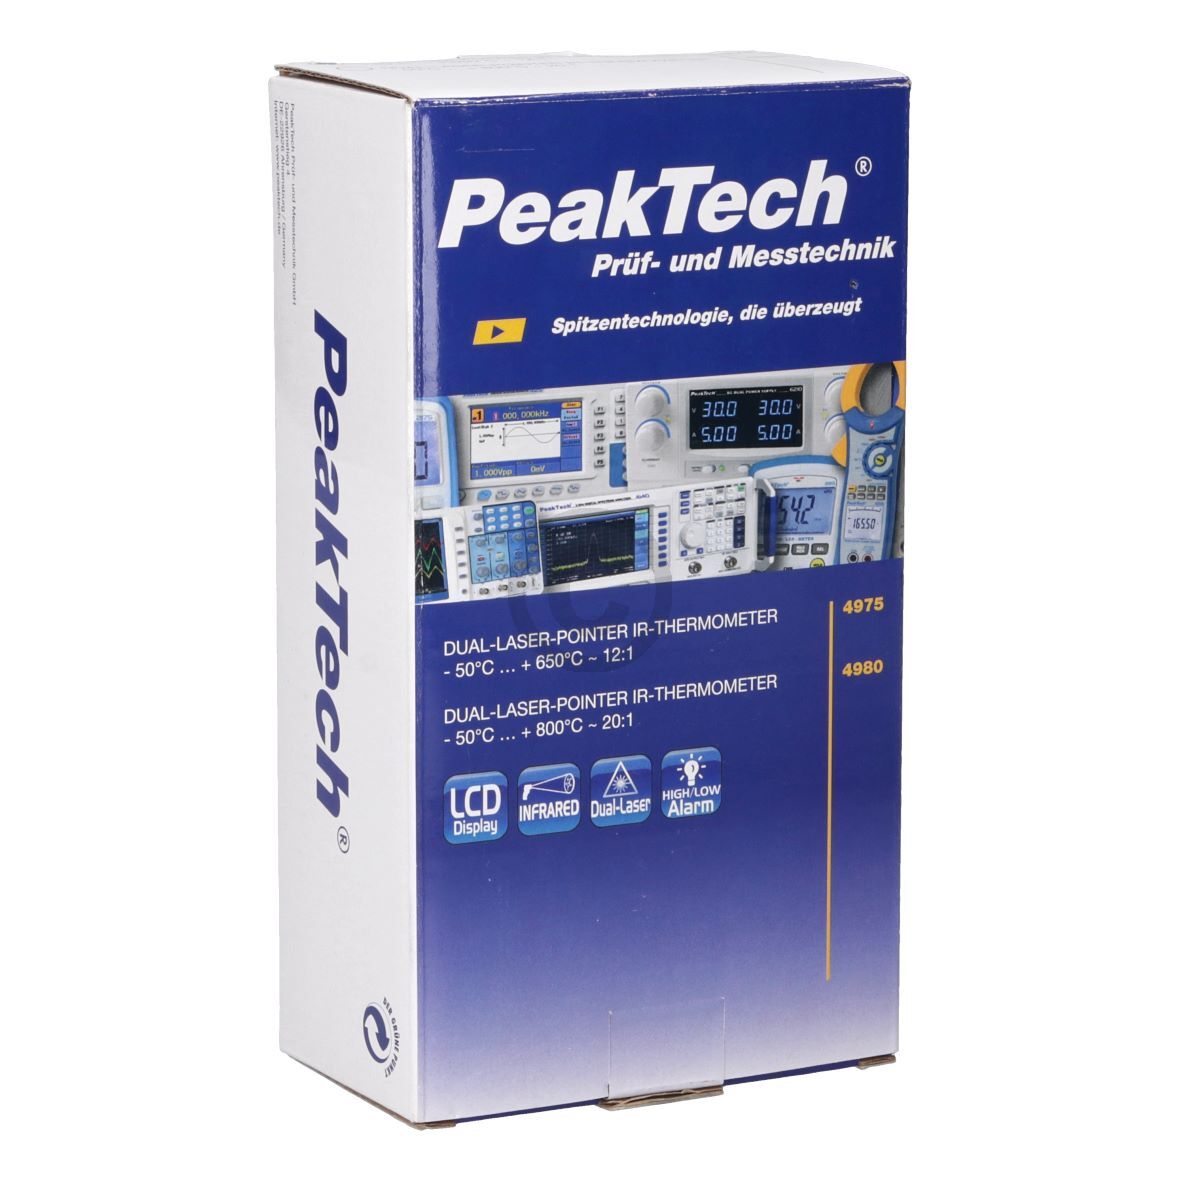 DualLaserPointer Infragot Thermometer PeakTech PT4975